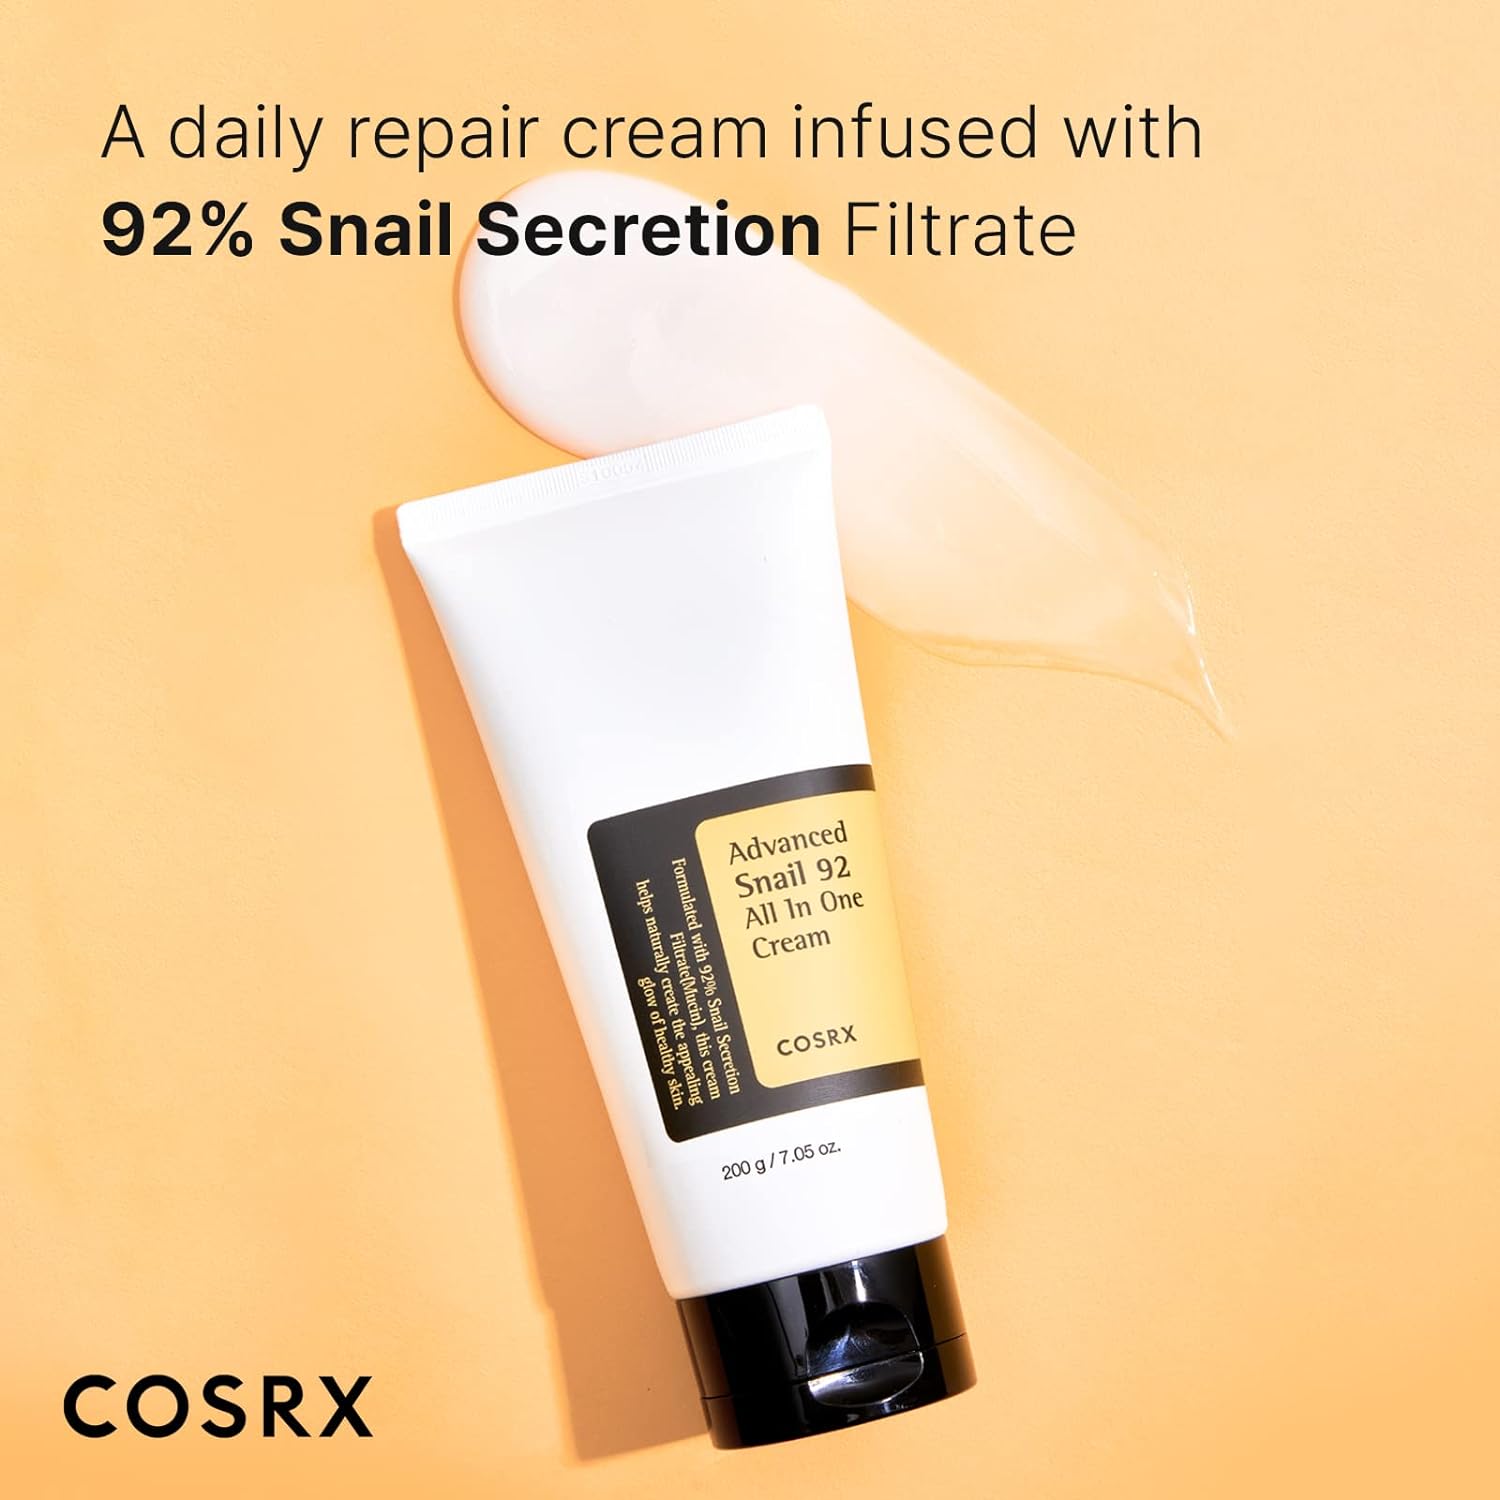 [US STOCK] COSRX Advanced Snail 92 All in One Cream Tube 200g - DODOSKIN